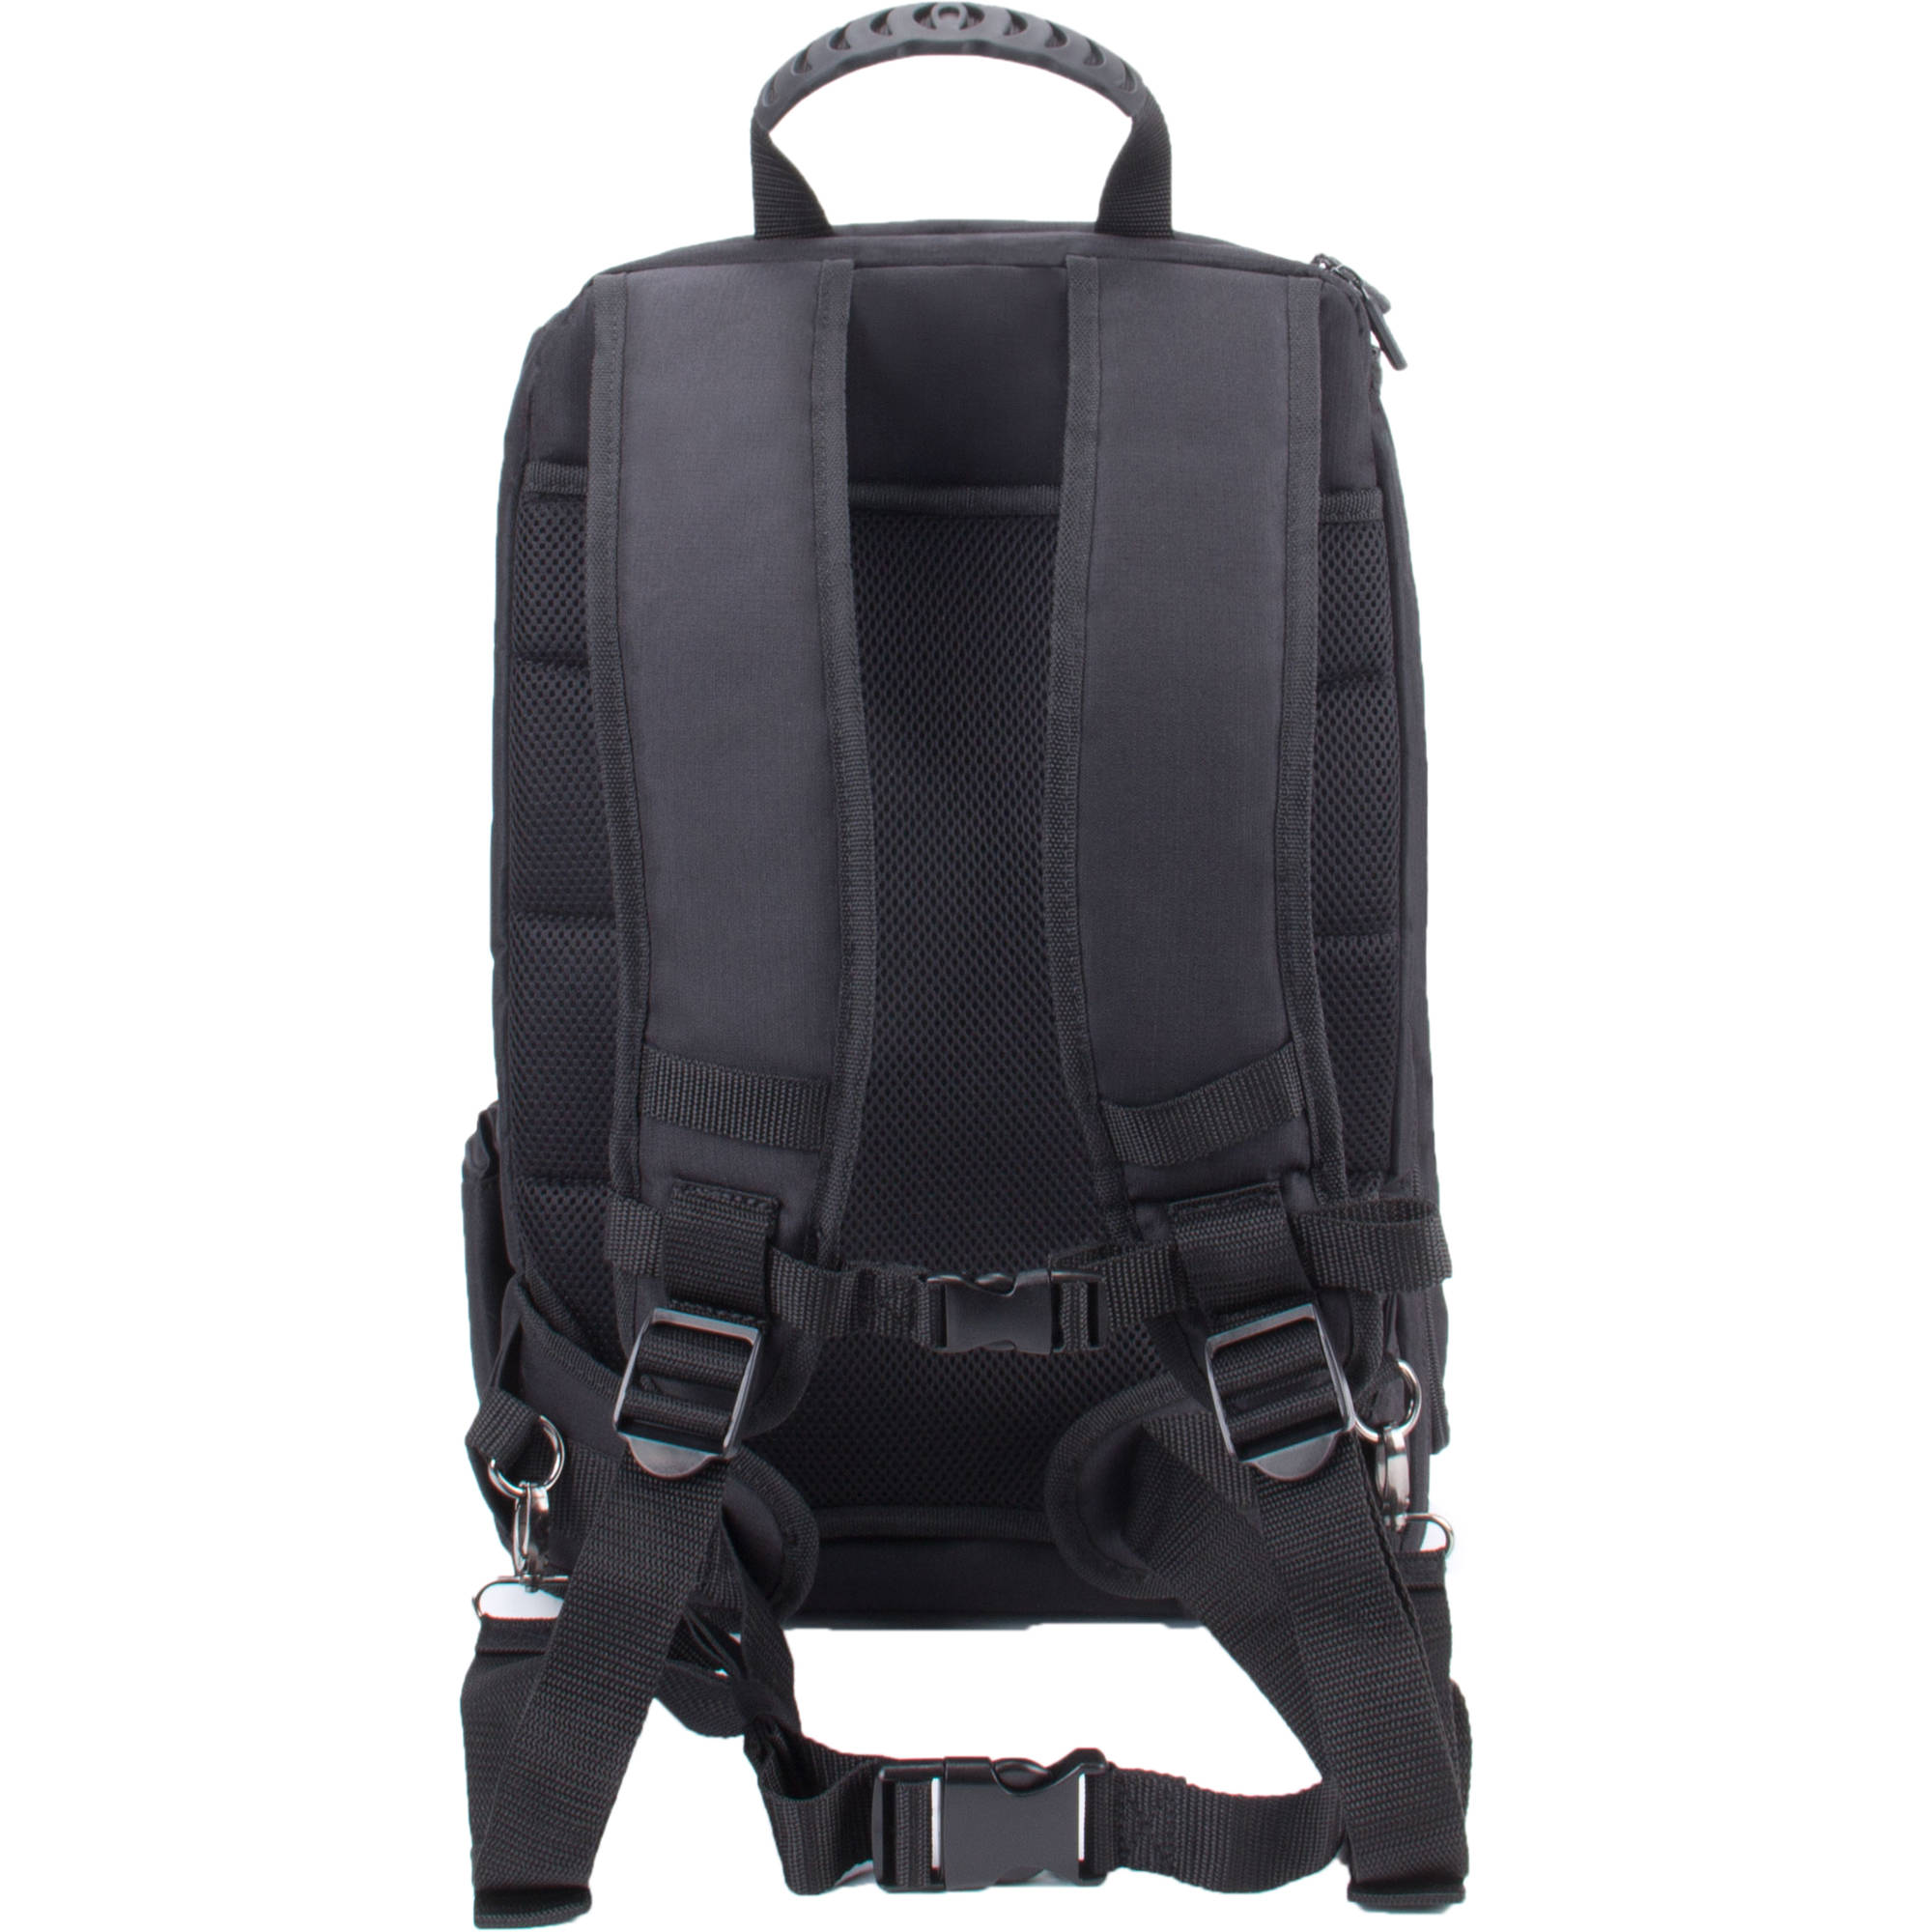 usa gear s17 dslr camera backpack